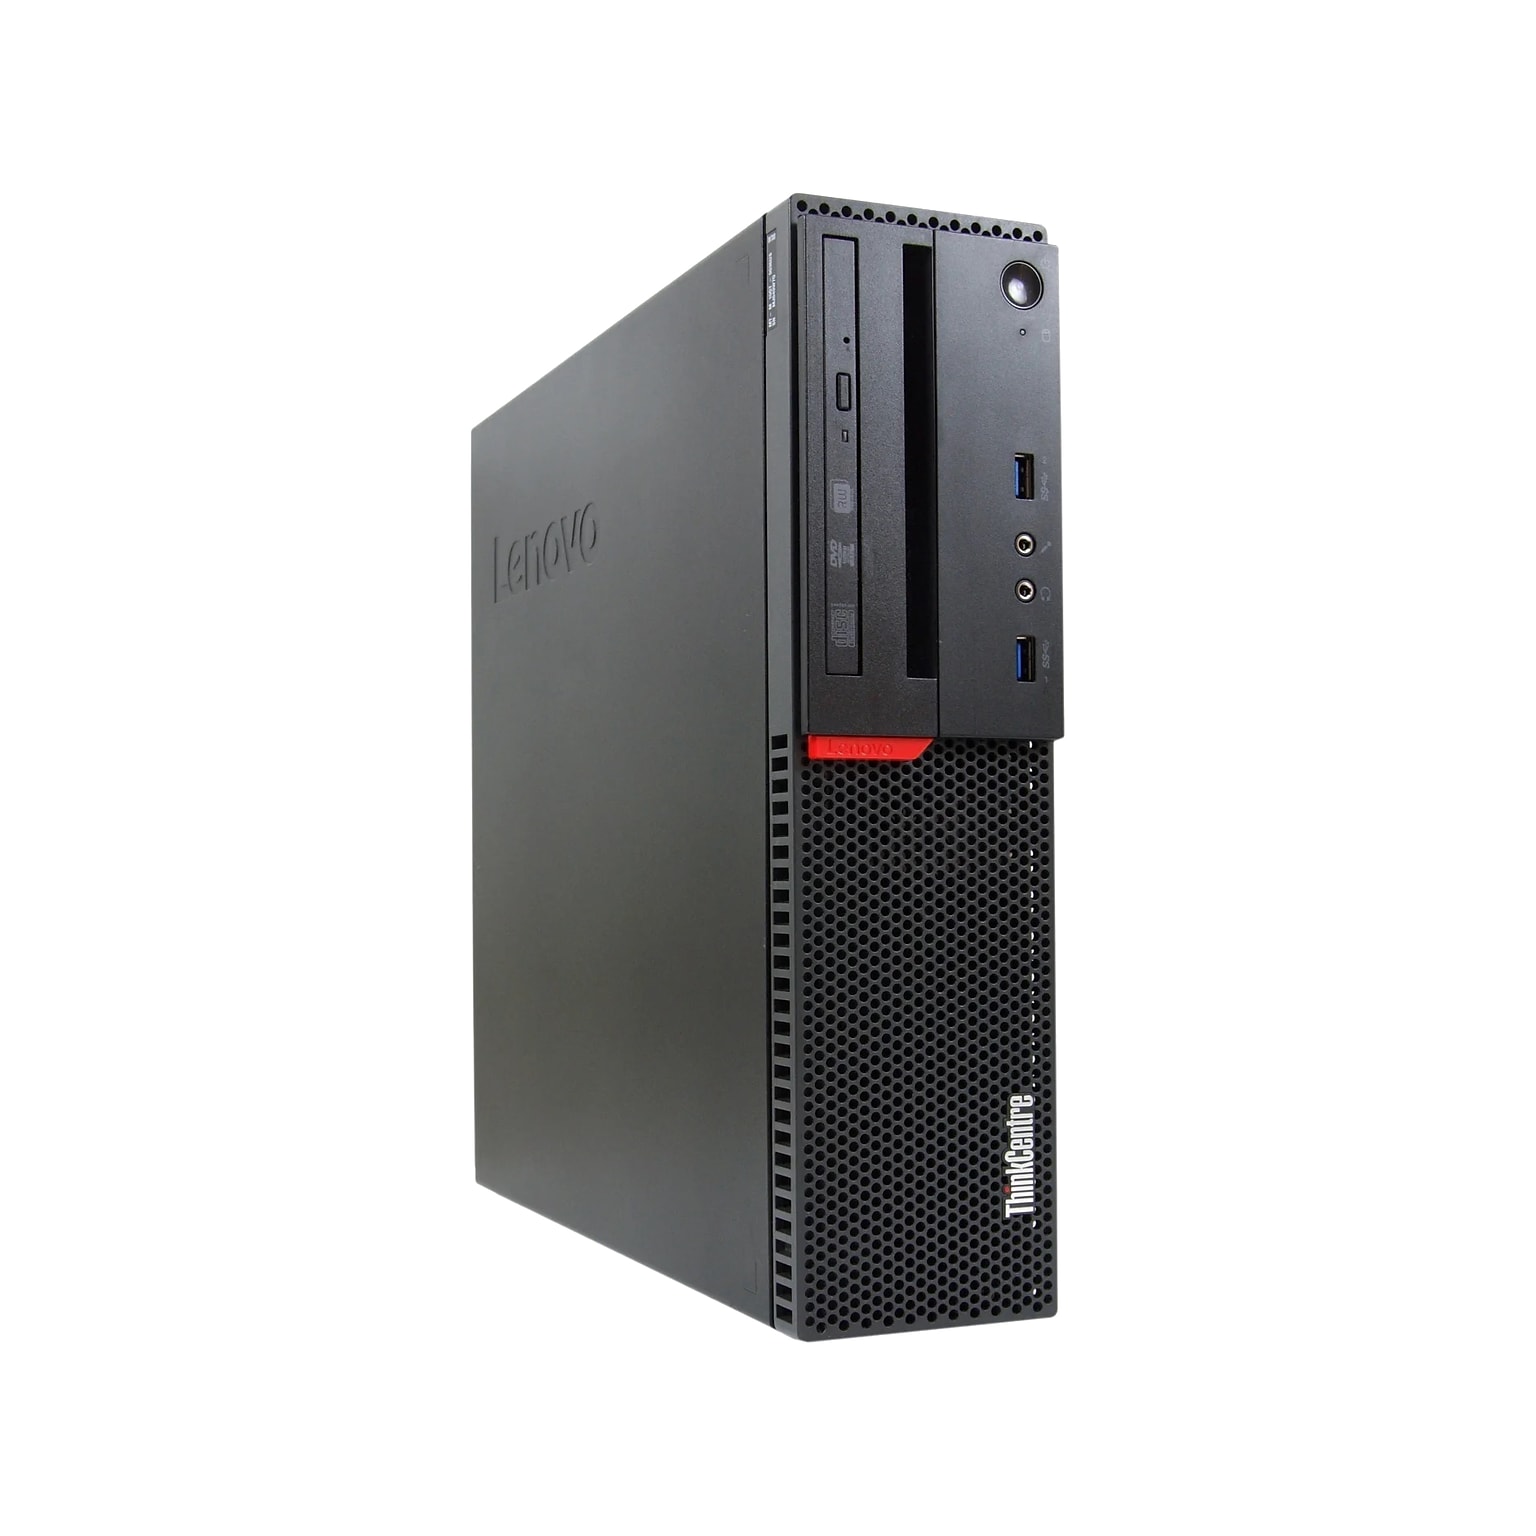 Lenovo ThinkCentre M700 Refurbished Desktop Computer, Intel Core i5-6400T, 8GB Memory, 256GB SSD (10FY0029US)